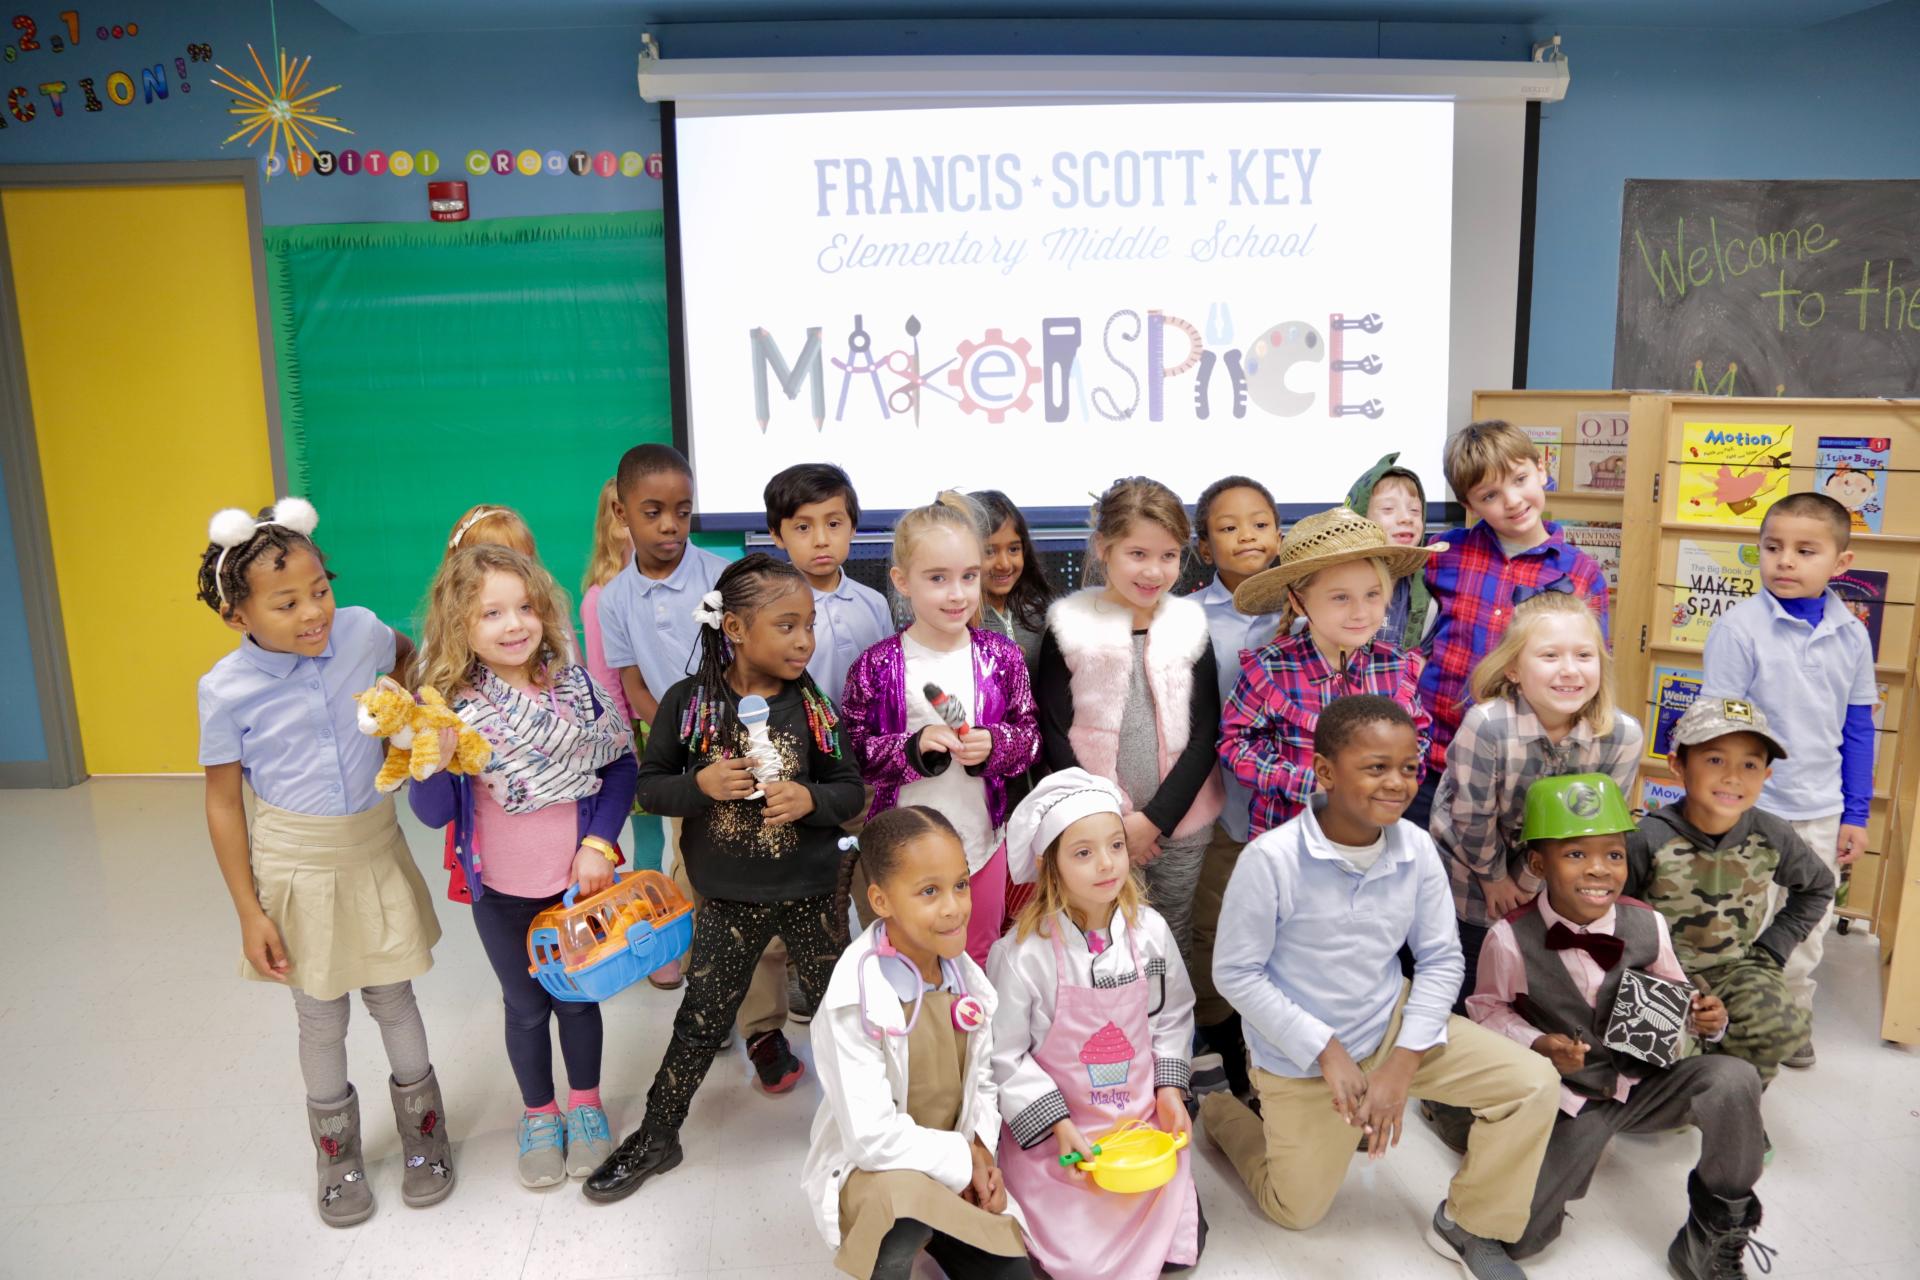 Francis Scott Key Elementary/Middle School